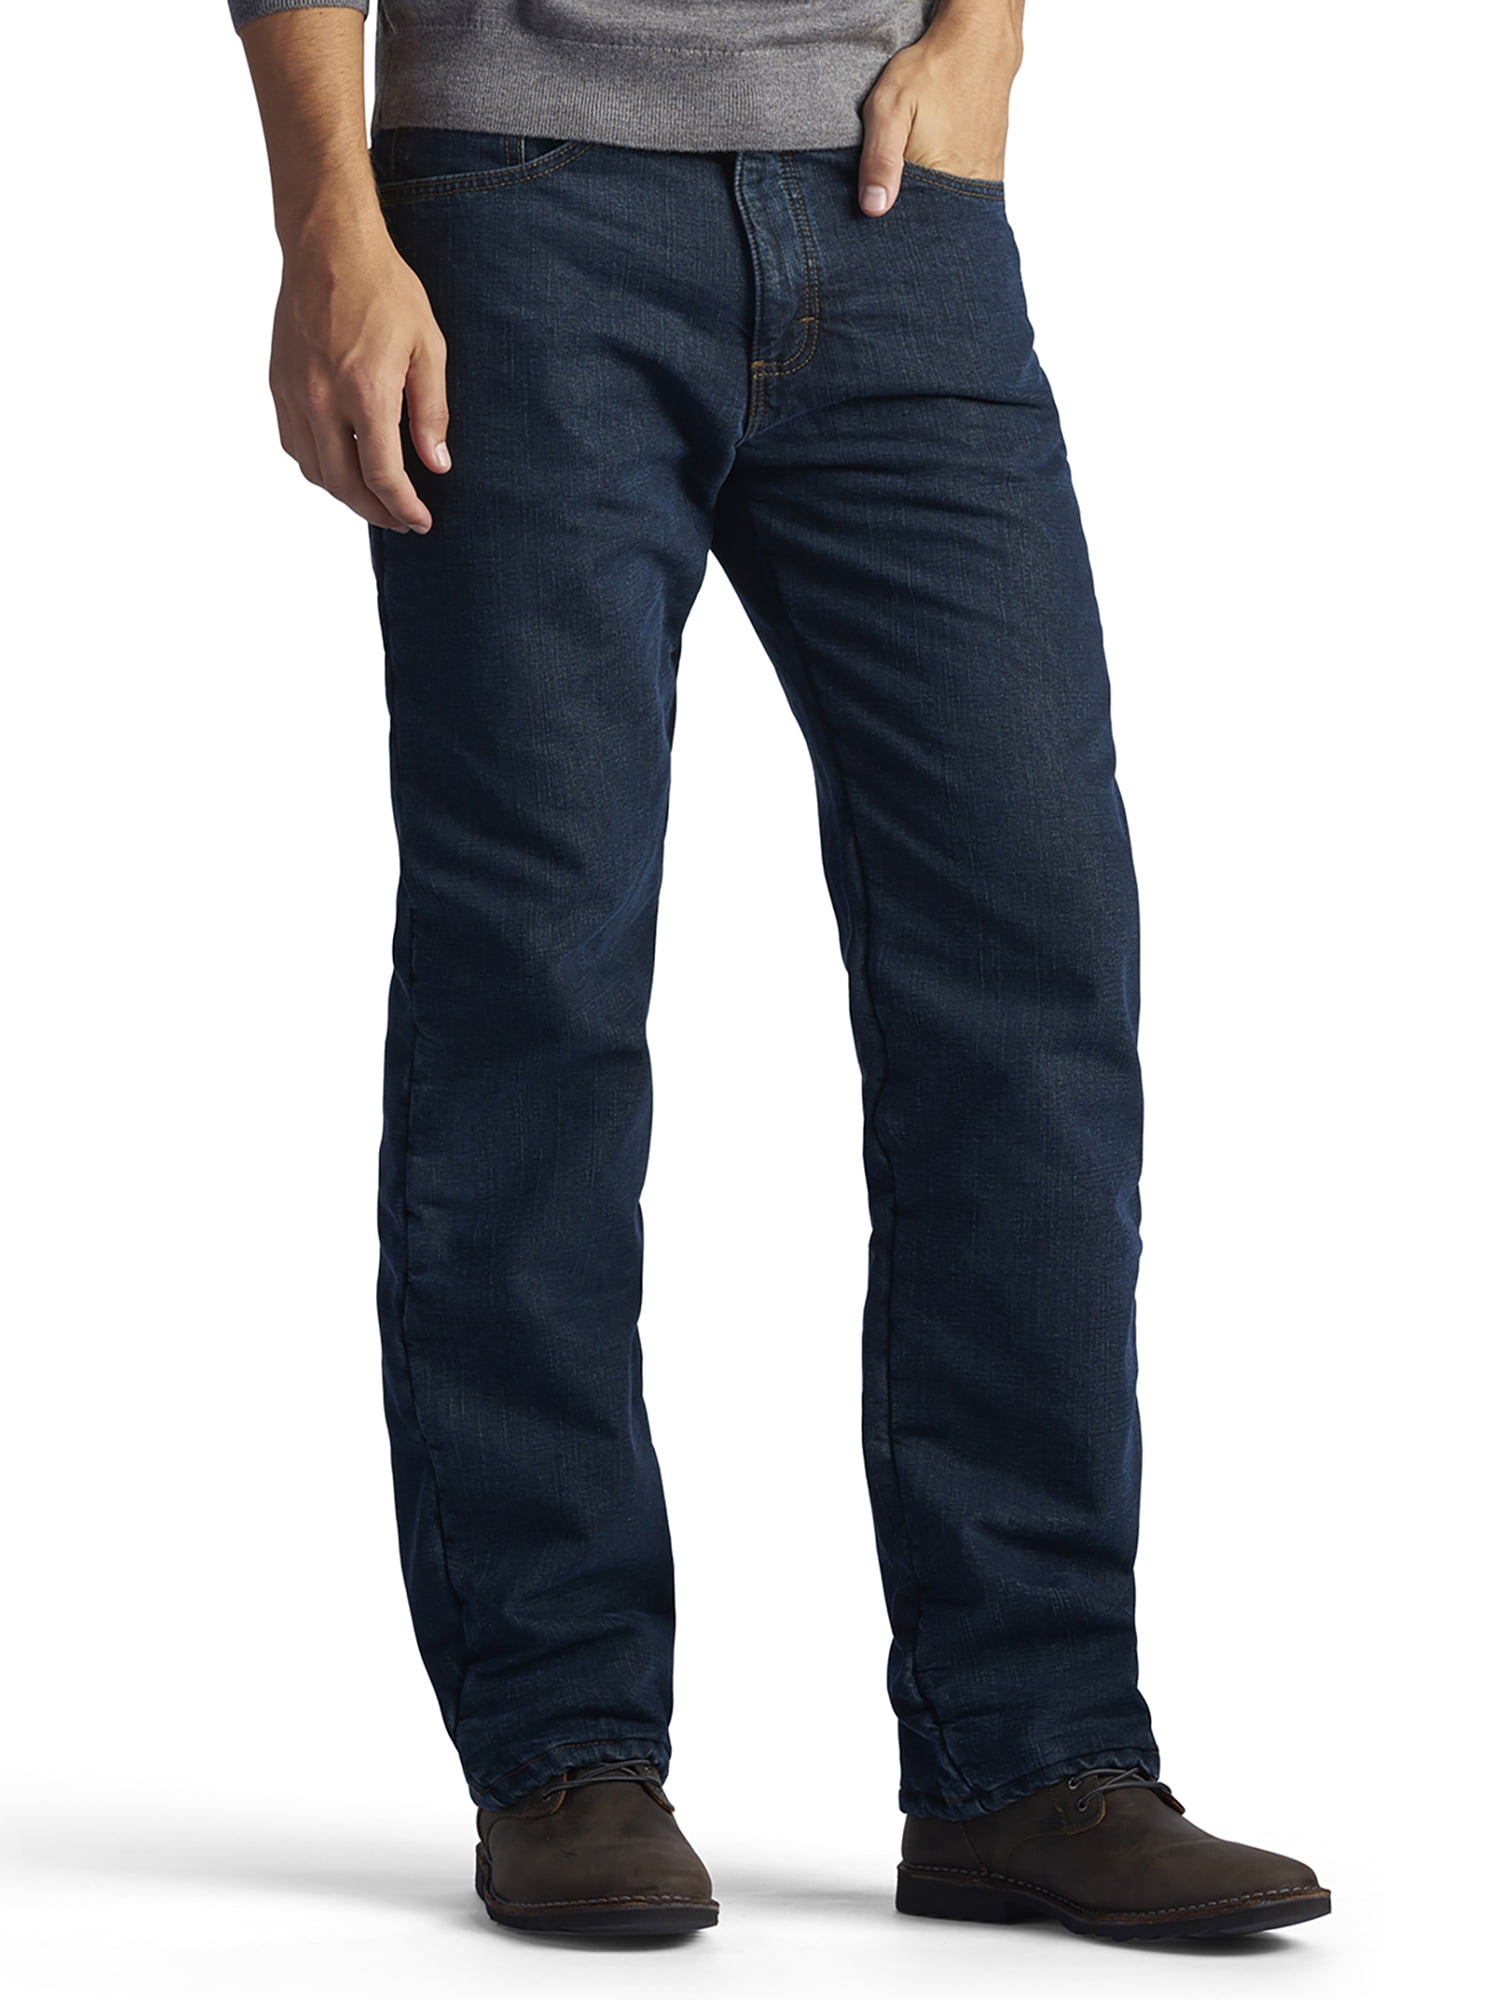 wrangler fleece lined jeans walmart